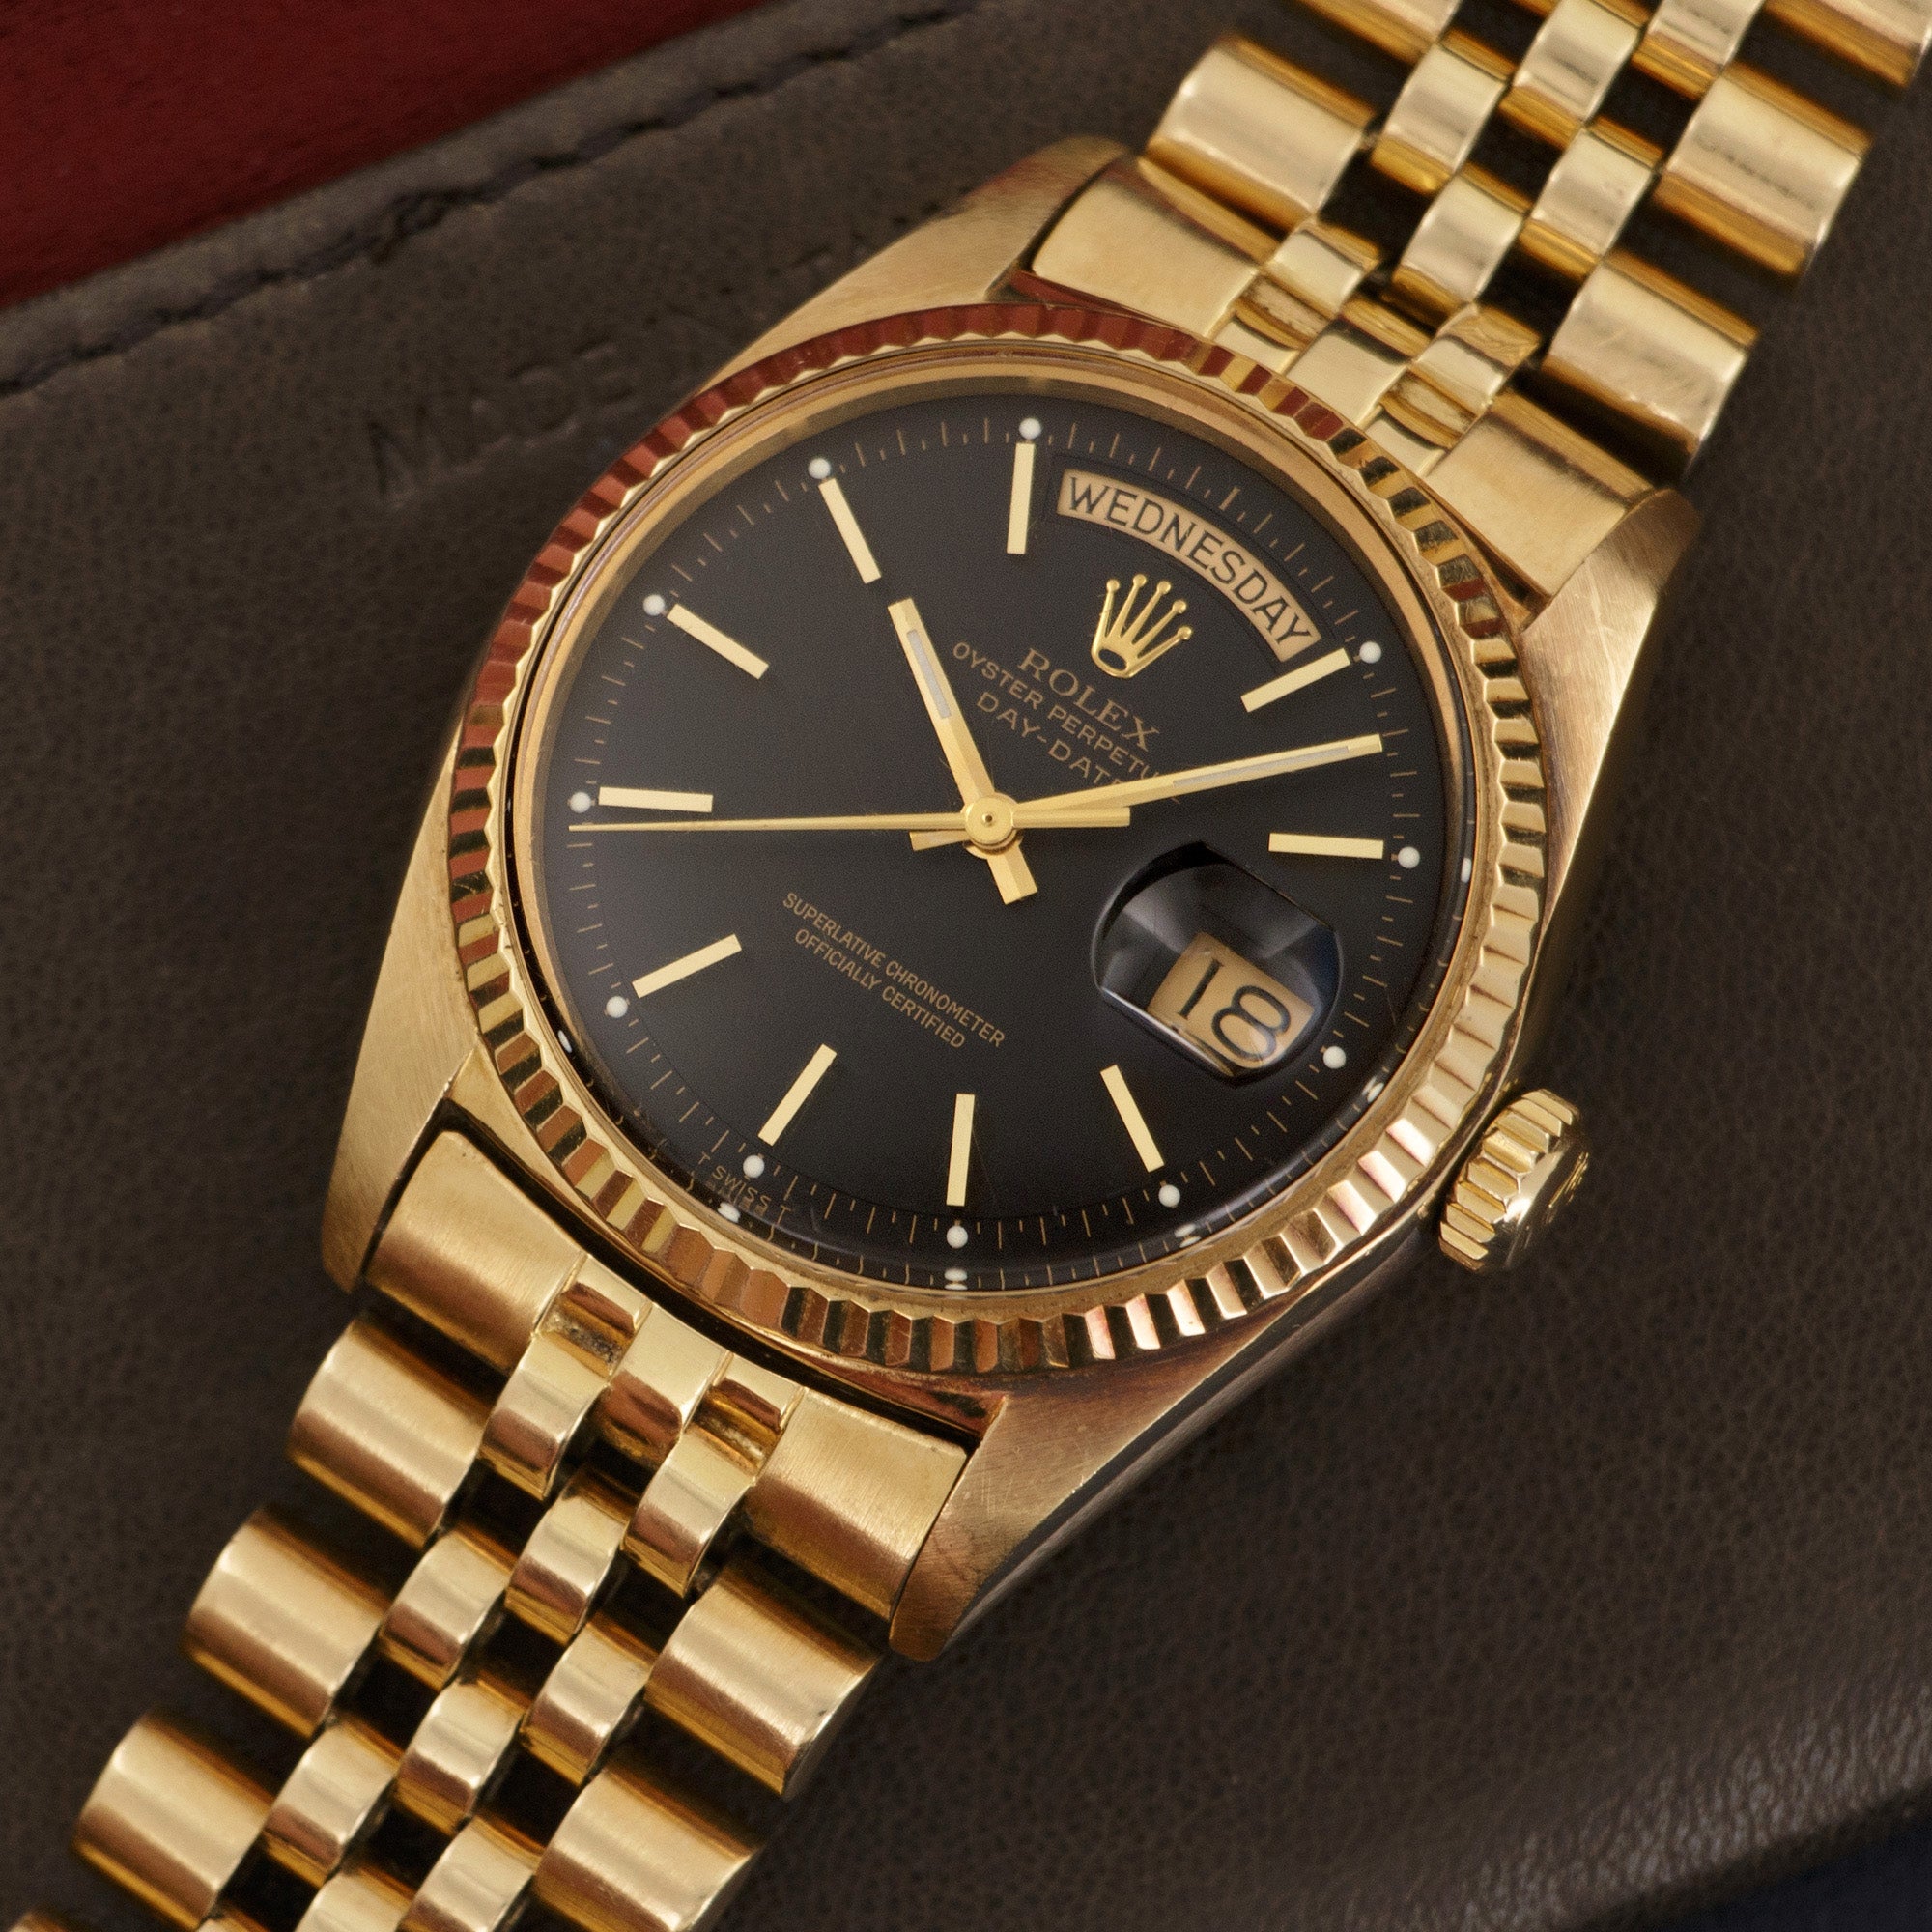 Rolex Yellow Gold Day-Date Watch, Circa 1971